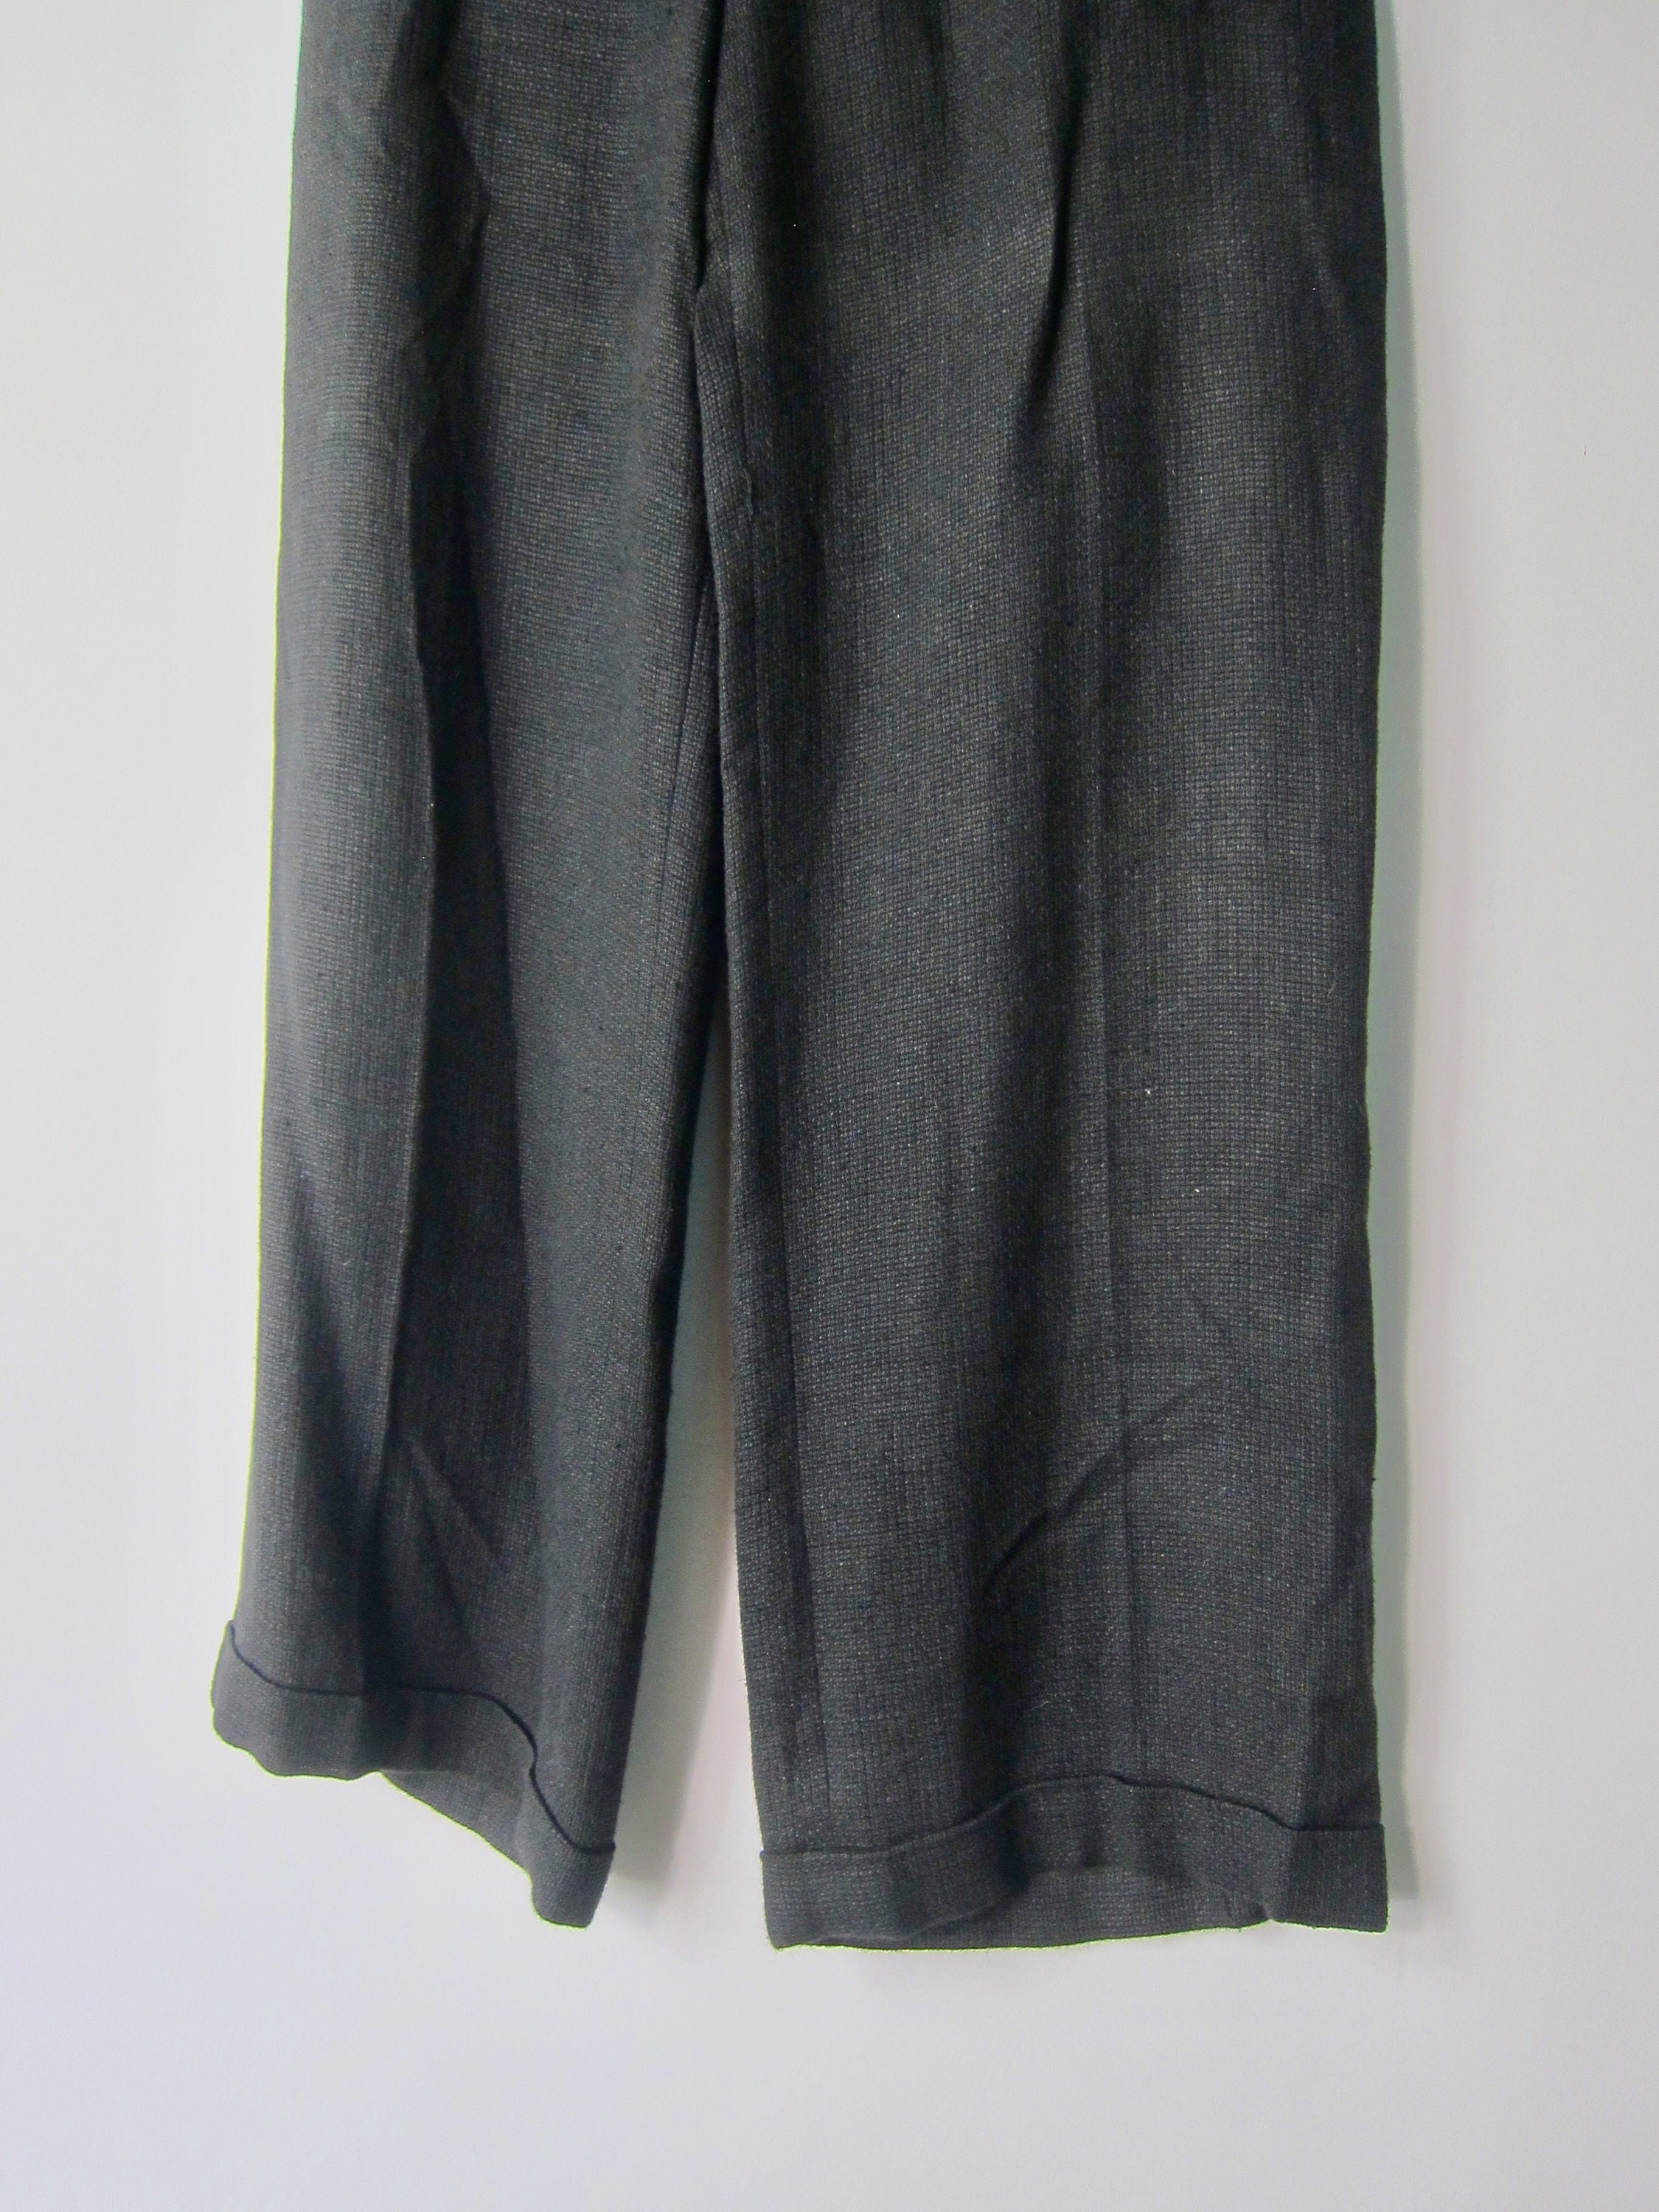 Black Woven Linen Rayon Pants 90s Wide Legged Trousers - Etsy